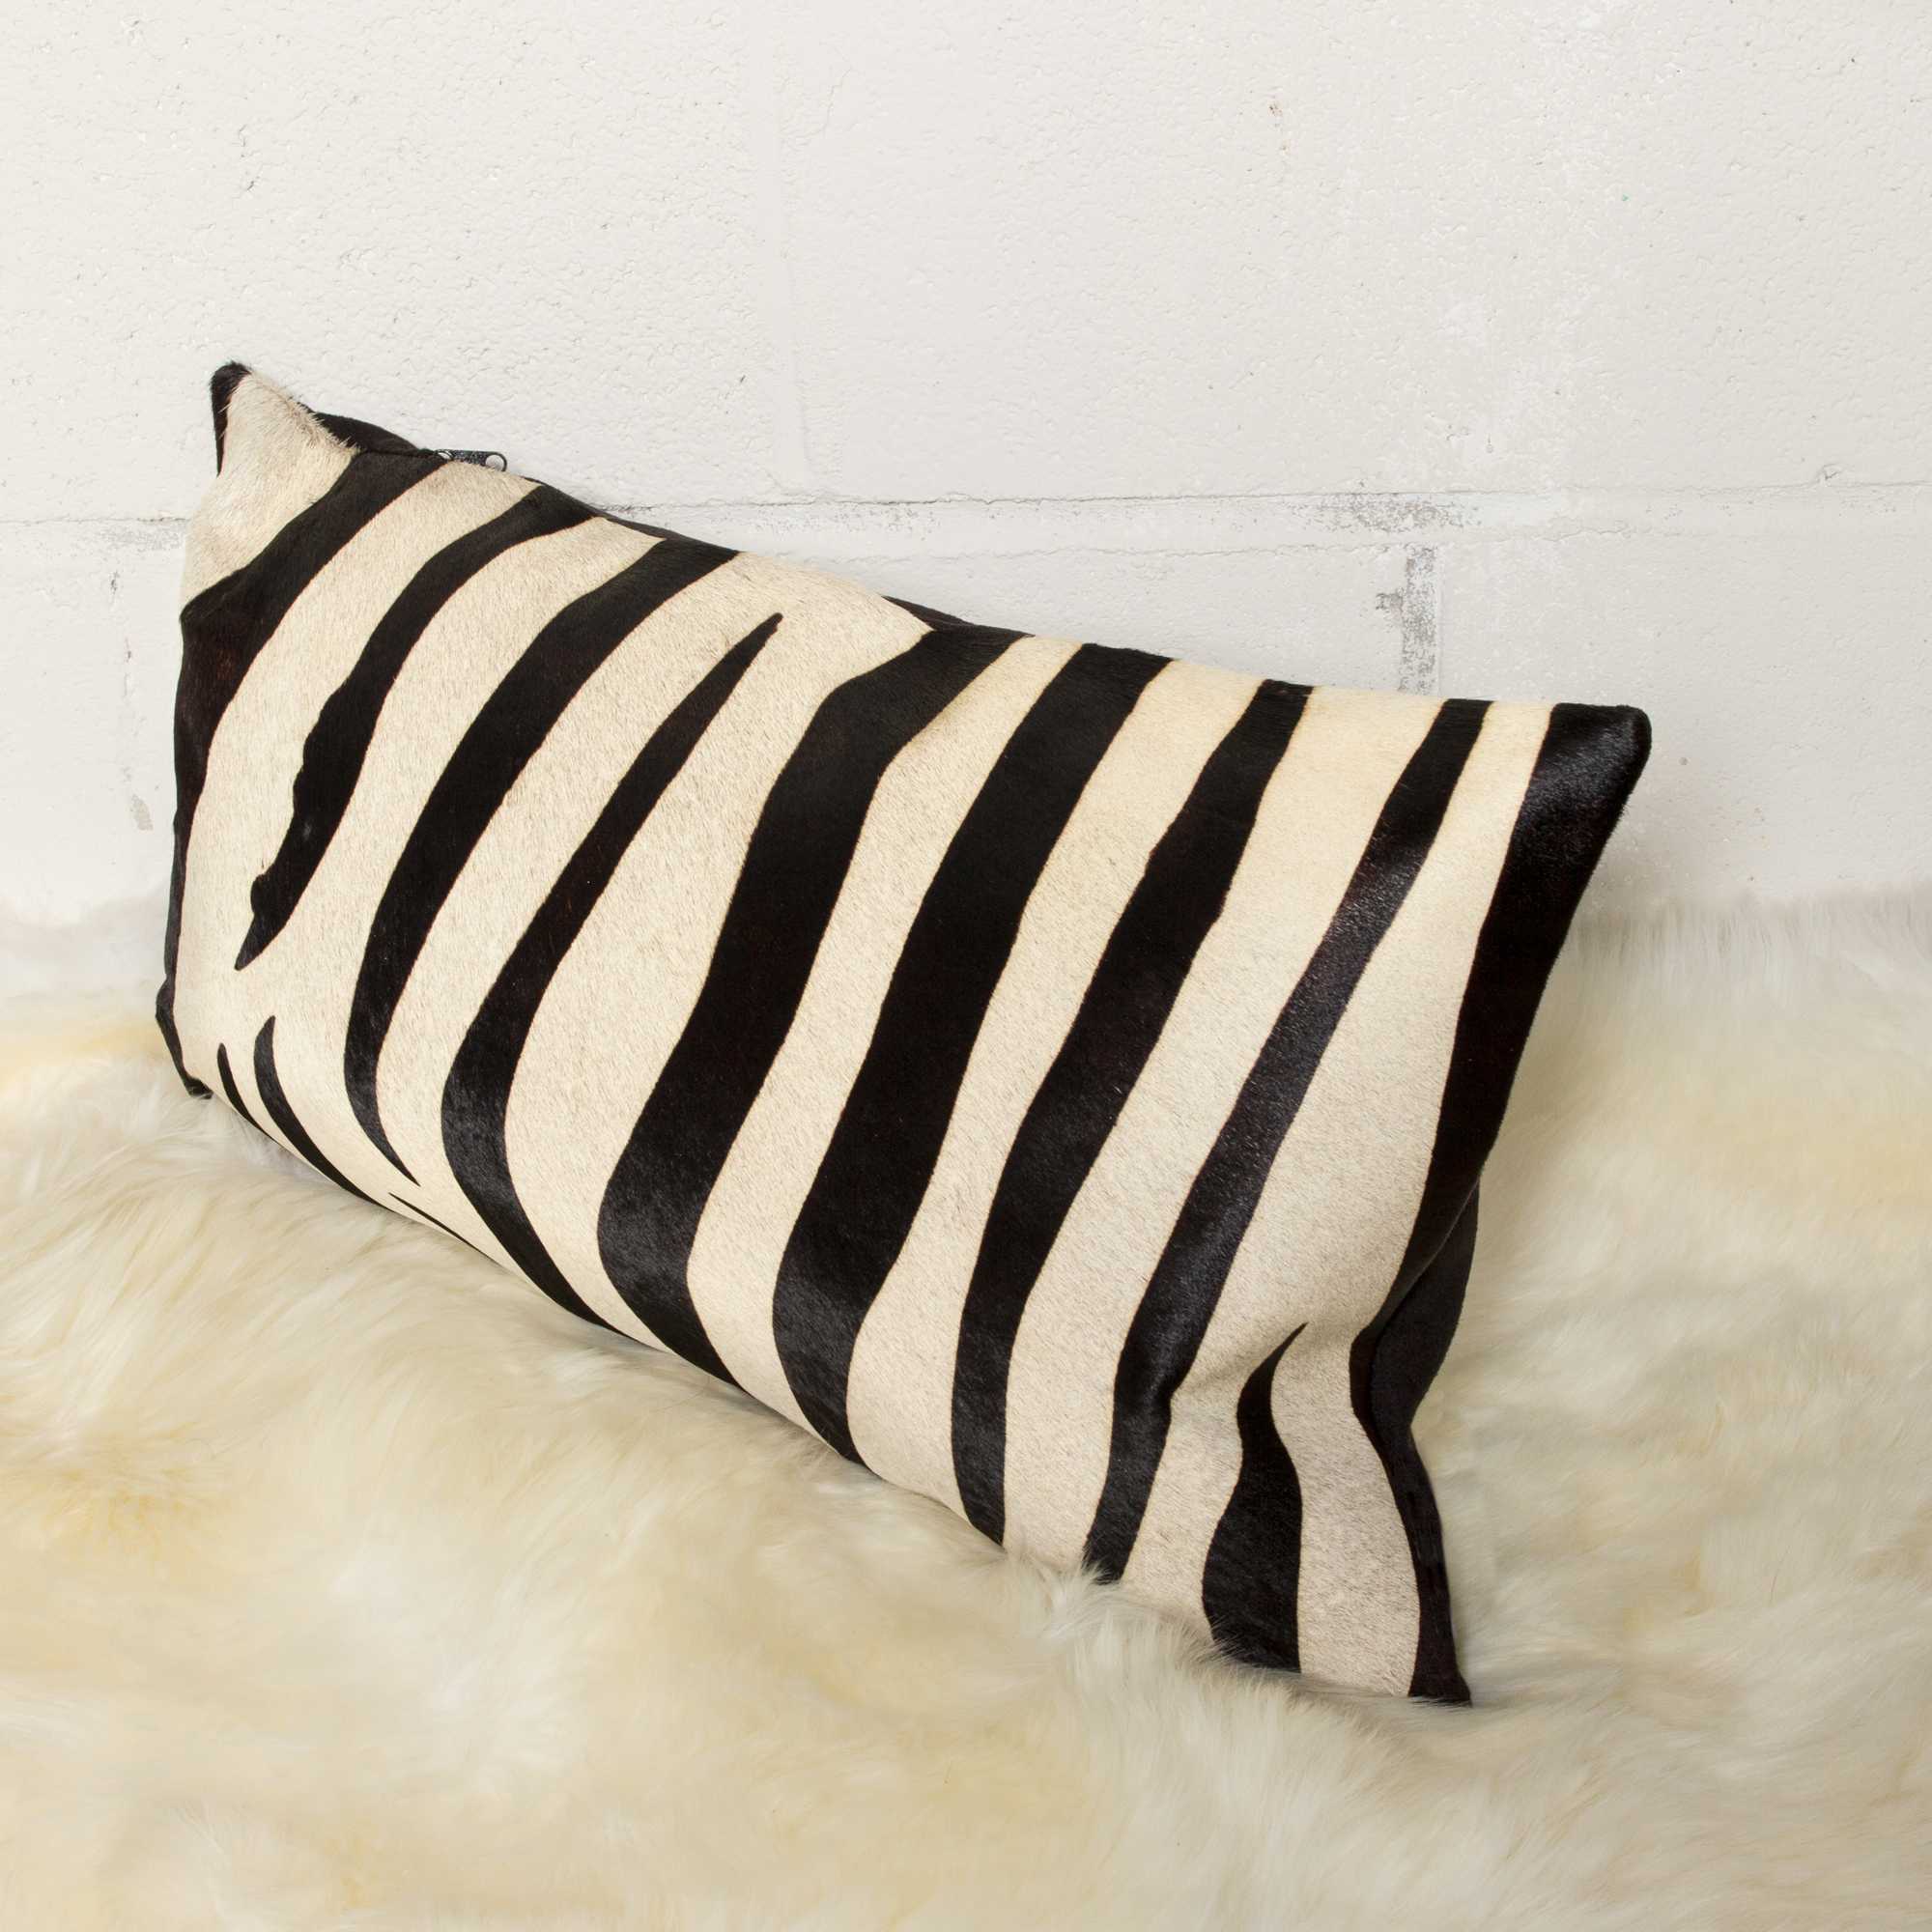 12" x 20" x 5" Zebra Black On Off White Cowhide - Pillow